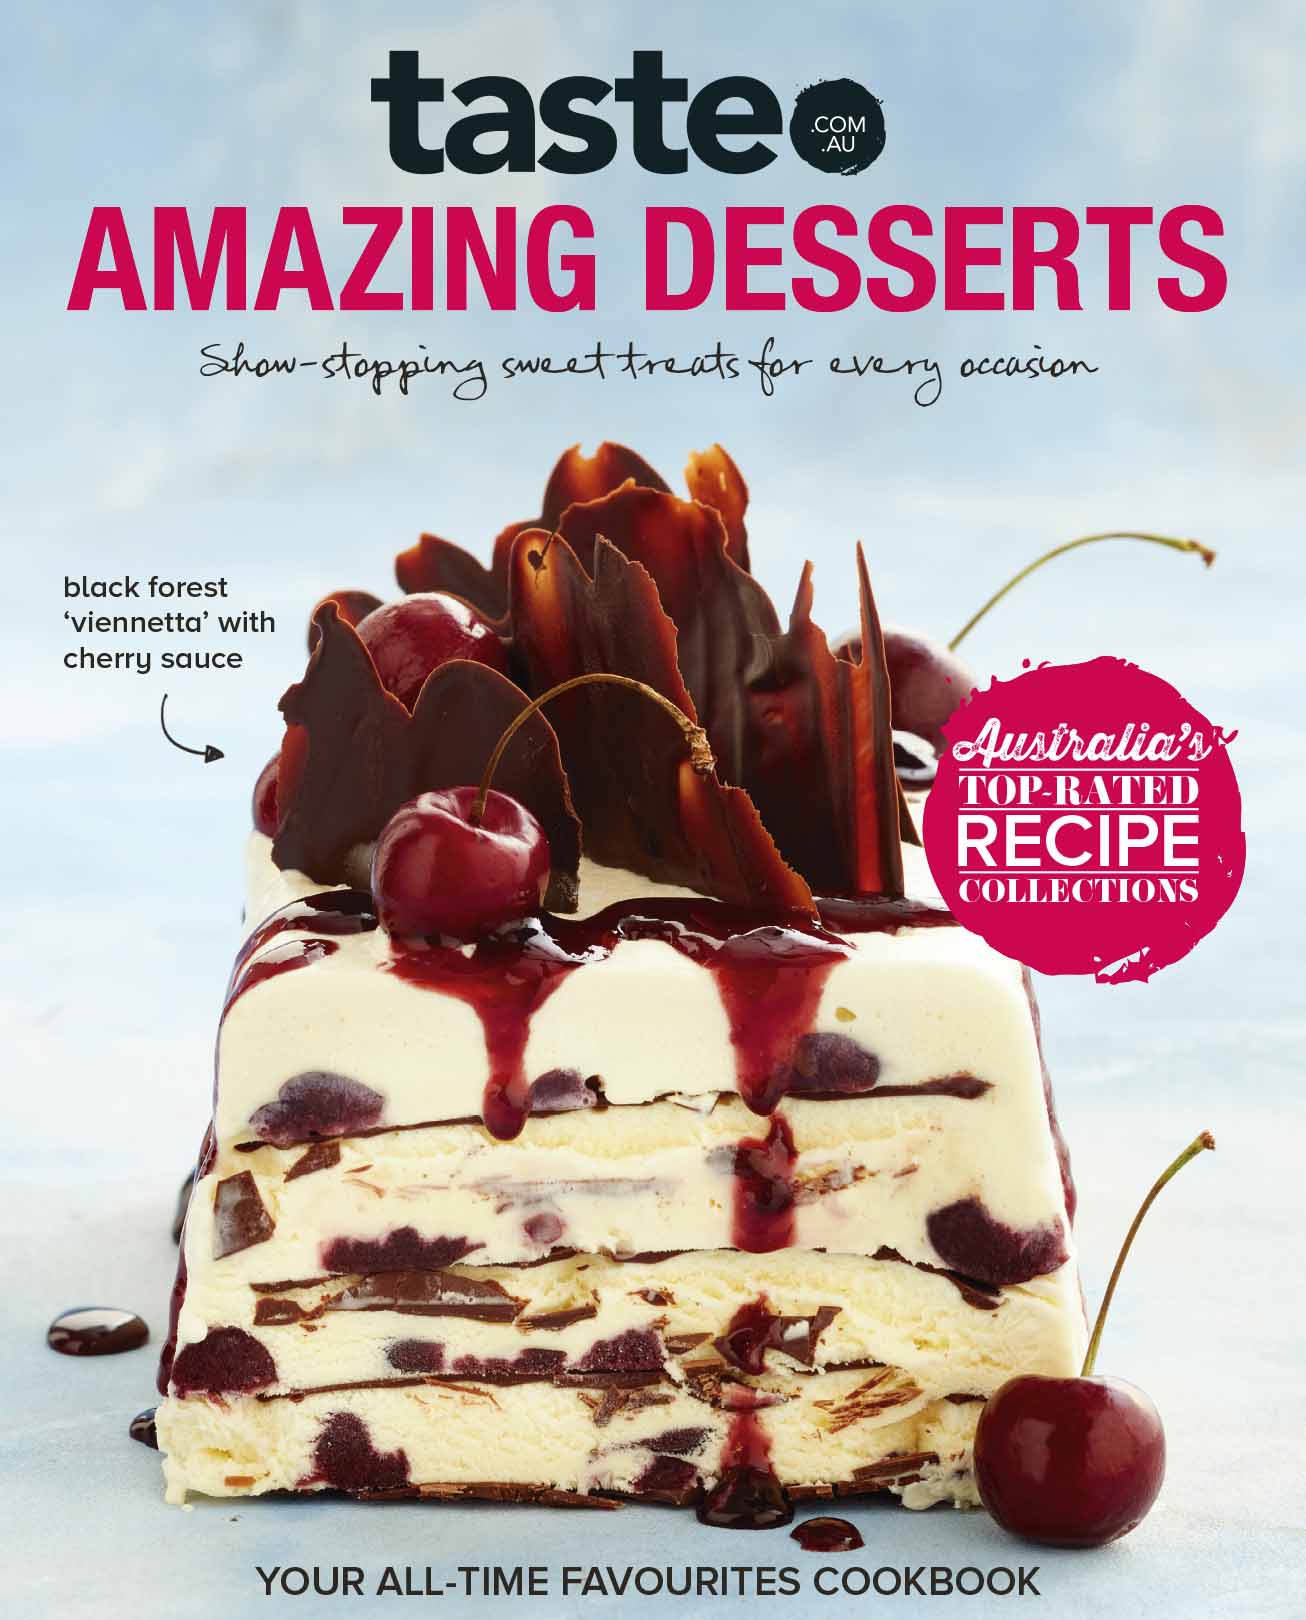 taste.com.au Amazing Desserts Cookbook